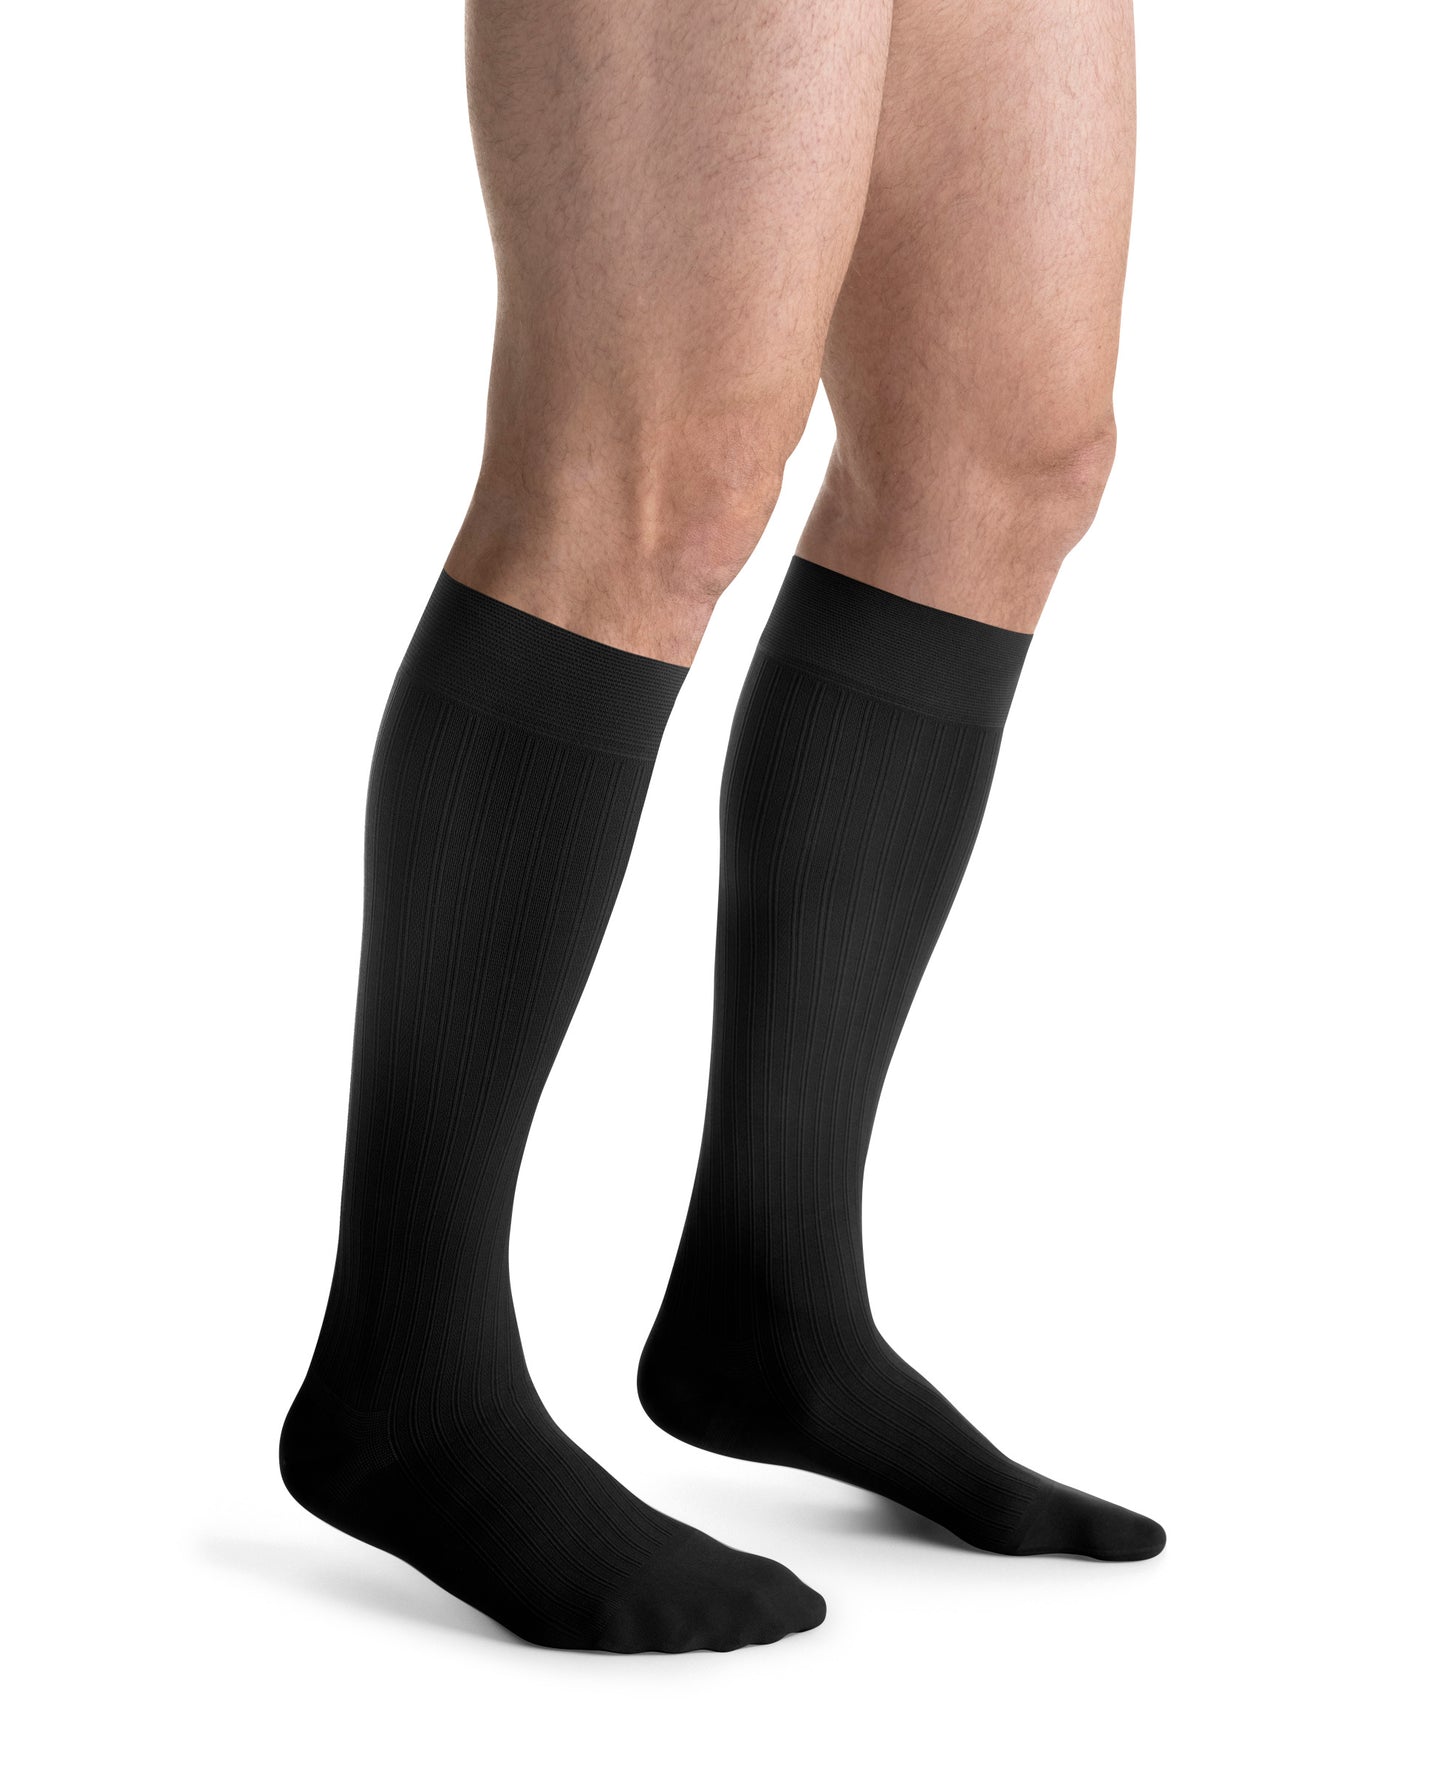 JOBST forMen Ambition Compression Socks 20-30 mmHg Knee High SoftFit Band Closed Toe